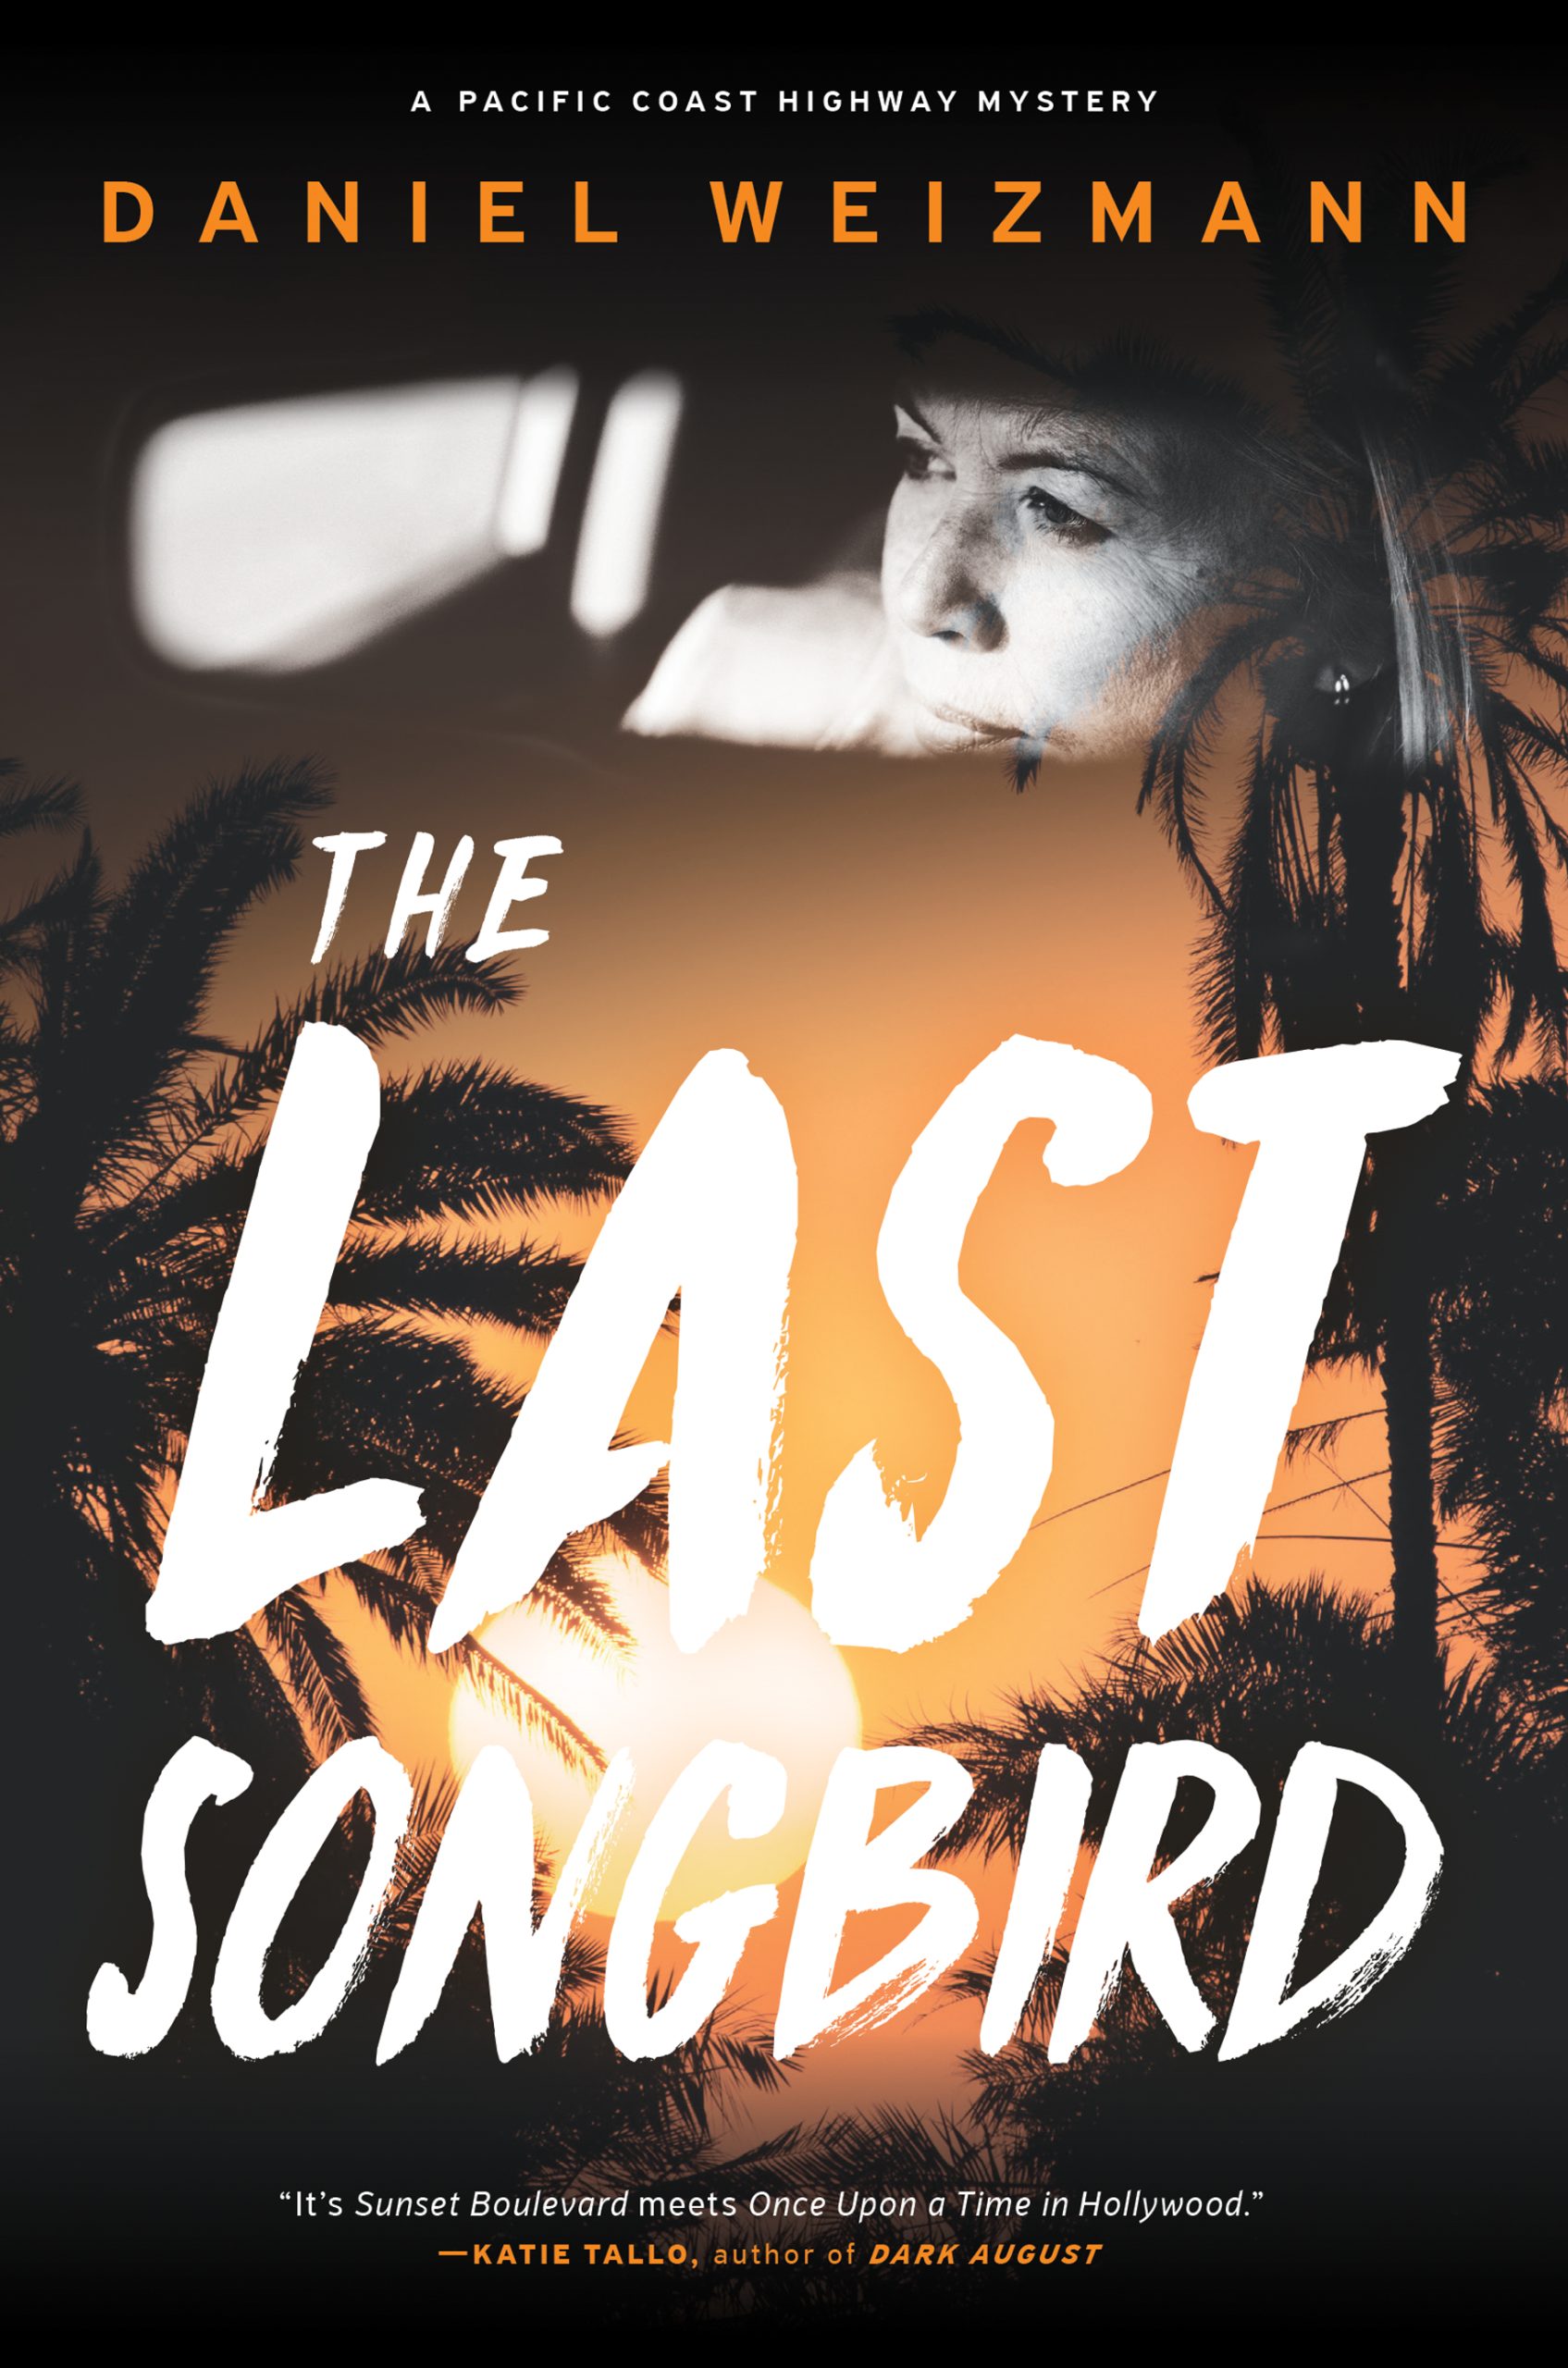 THE LAST SONGBIRD by Daniel Weizmann